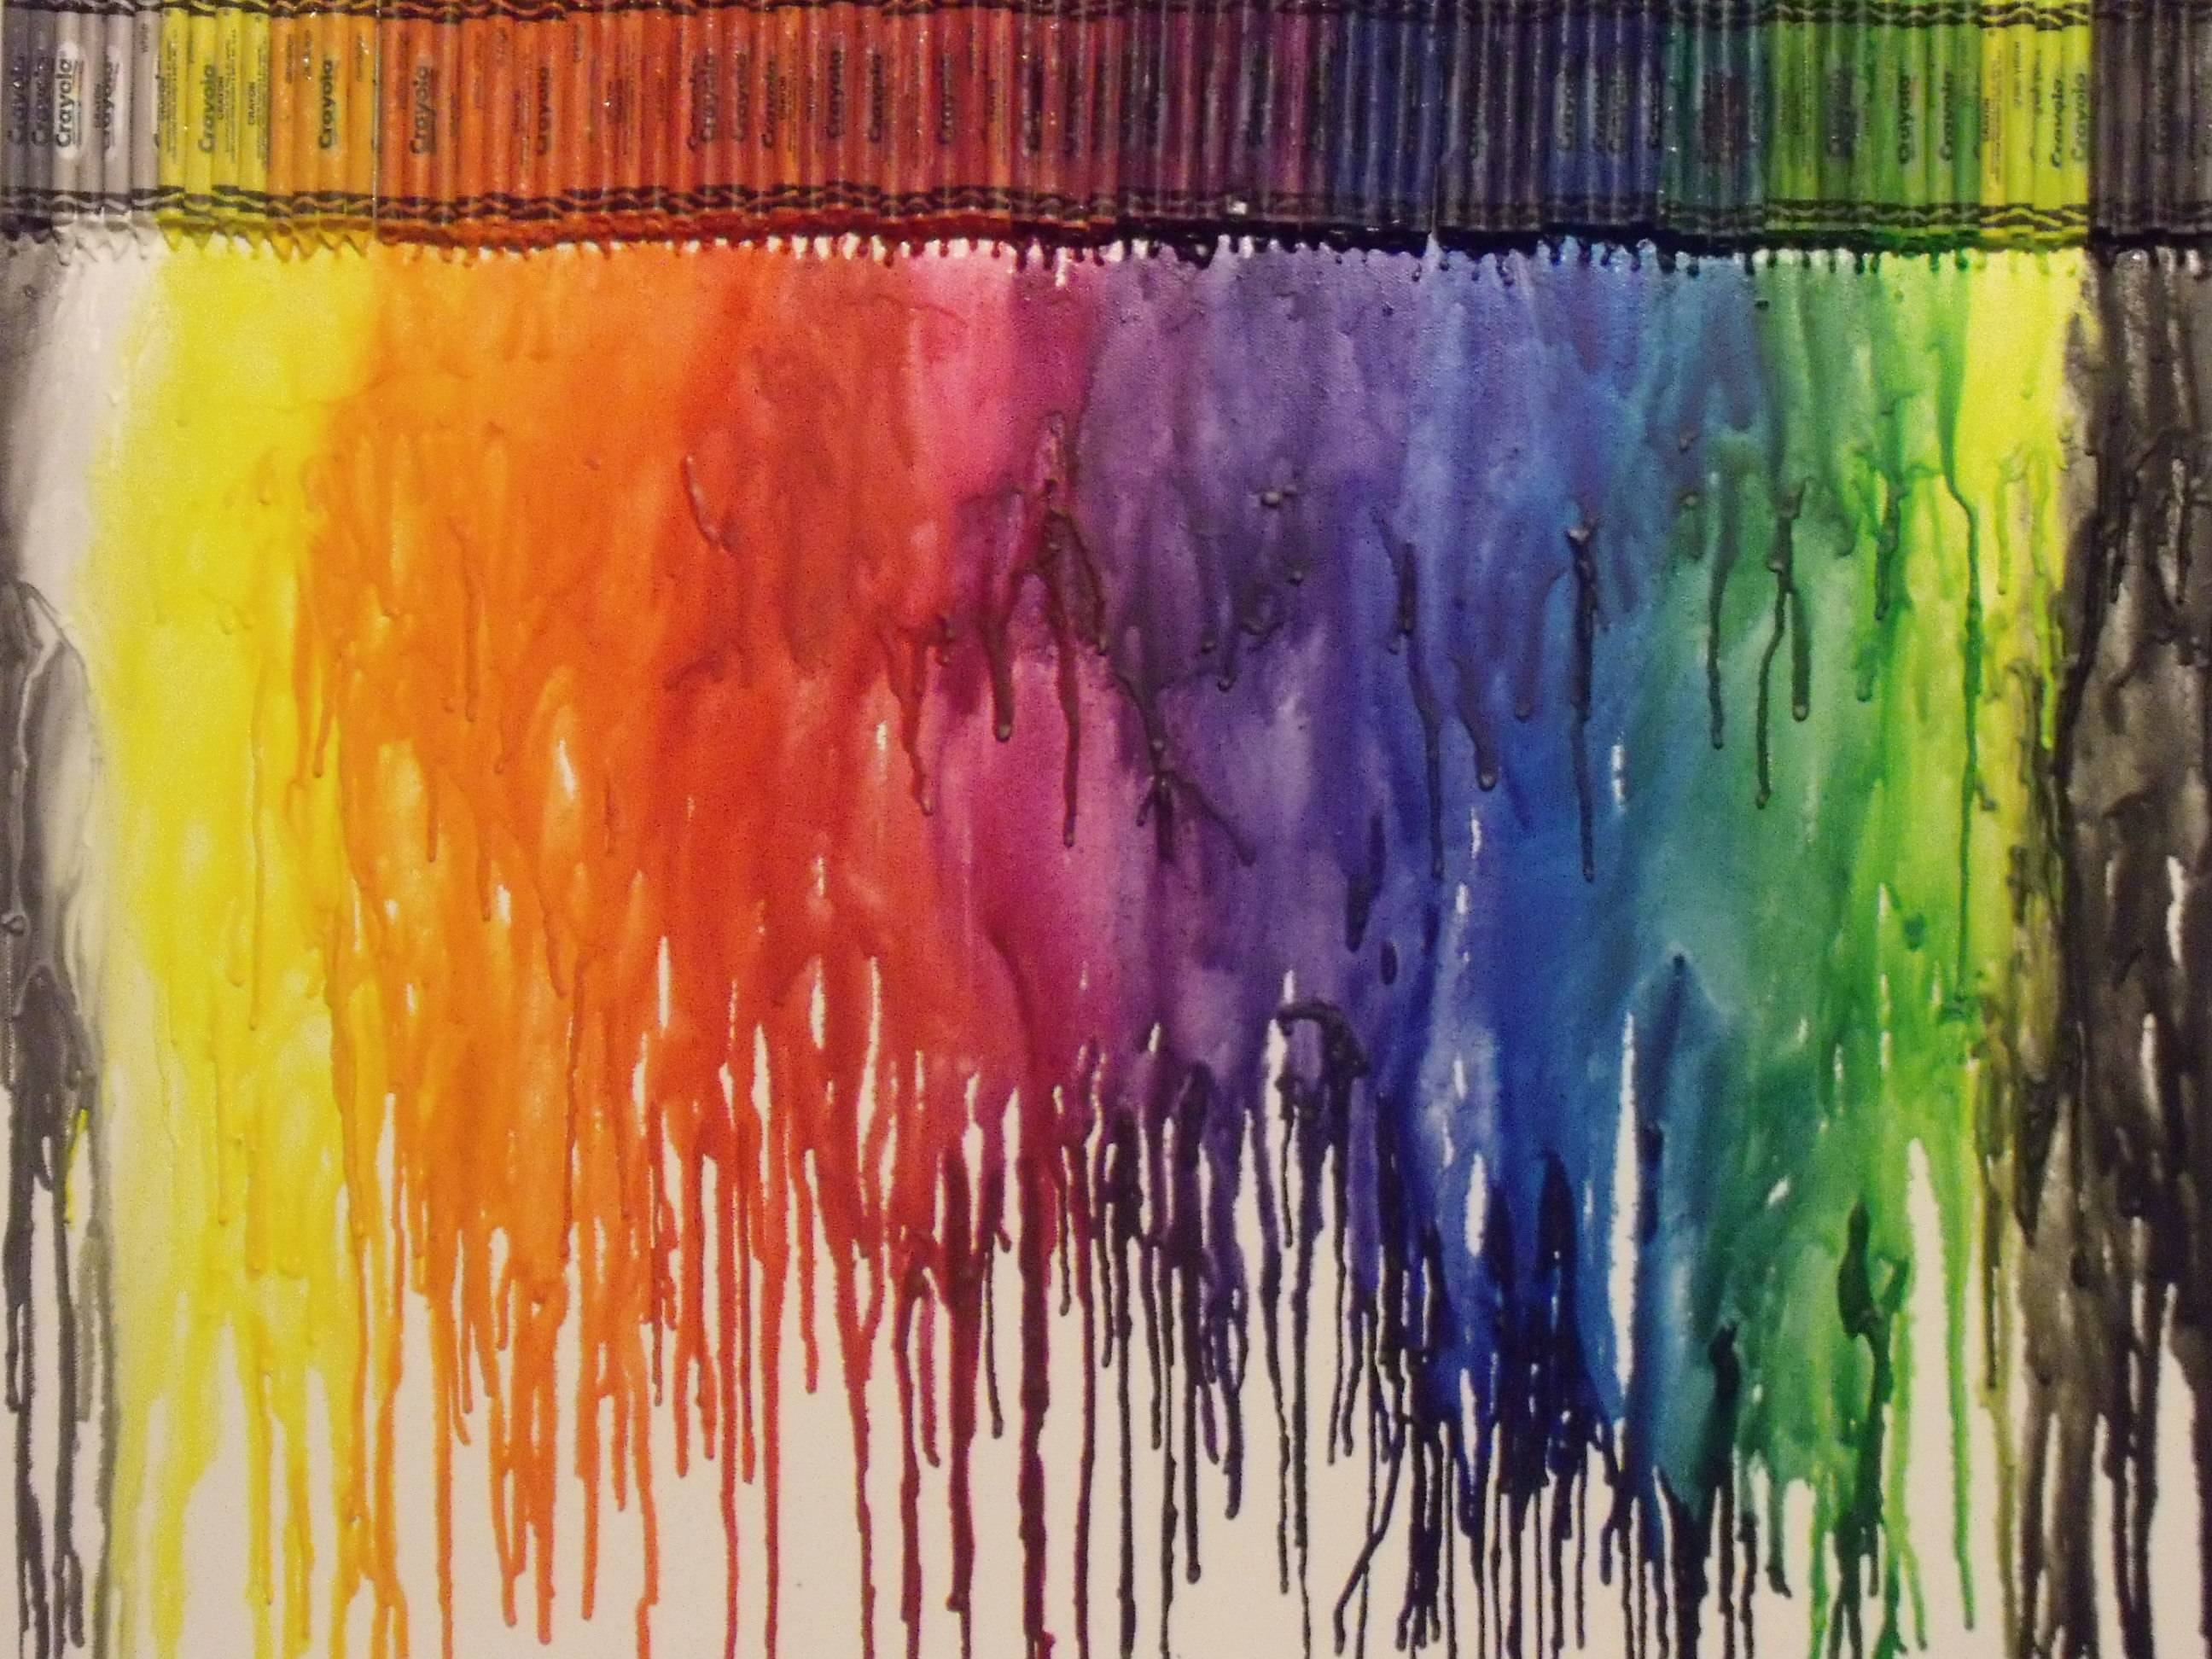 Crayola Crayons Wallpaper Image & Picture